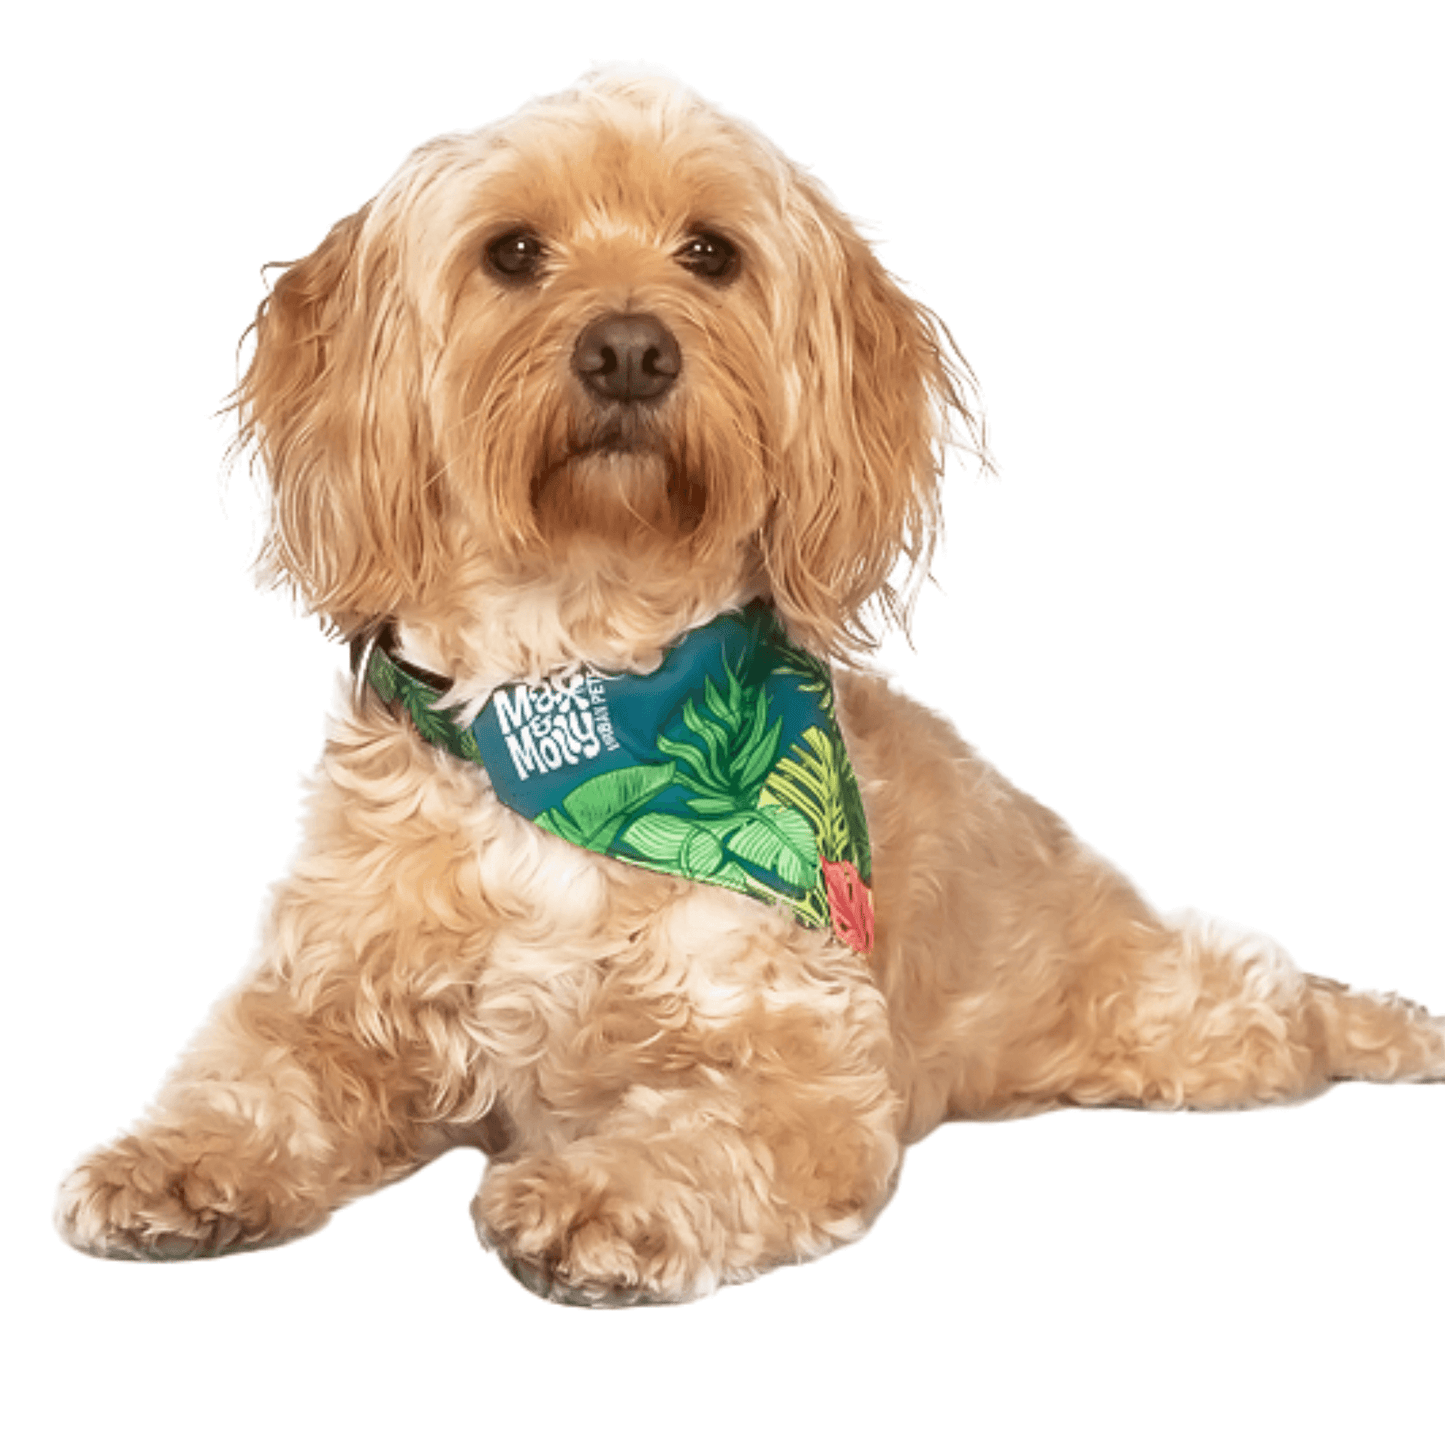 Reversible dog bandana, over the collar, fashion accessory